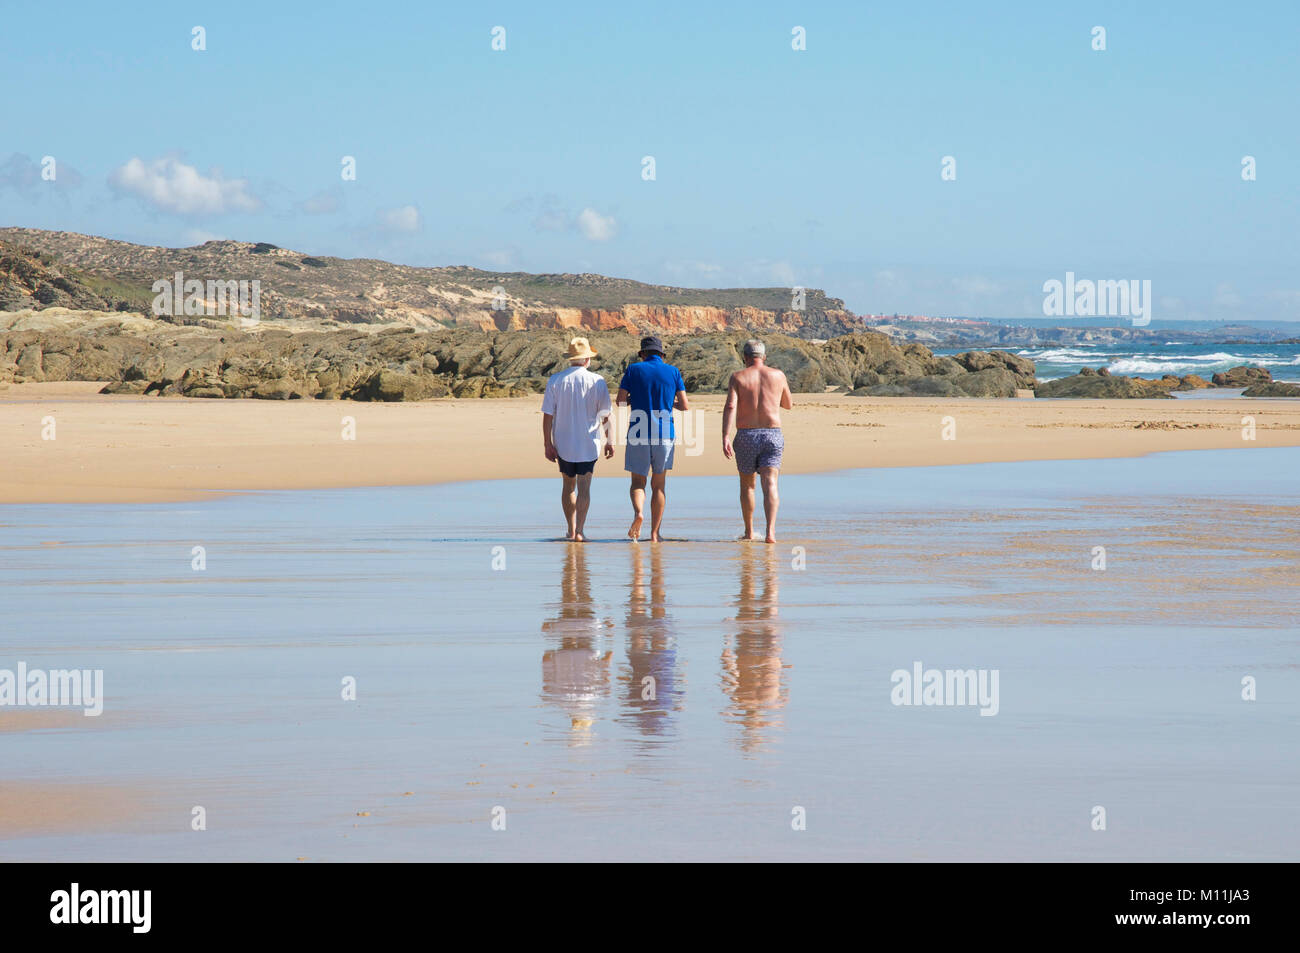 Backs of three men on beach Stock Photo